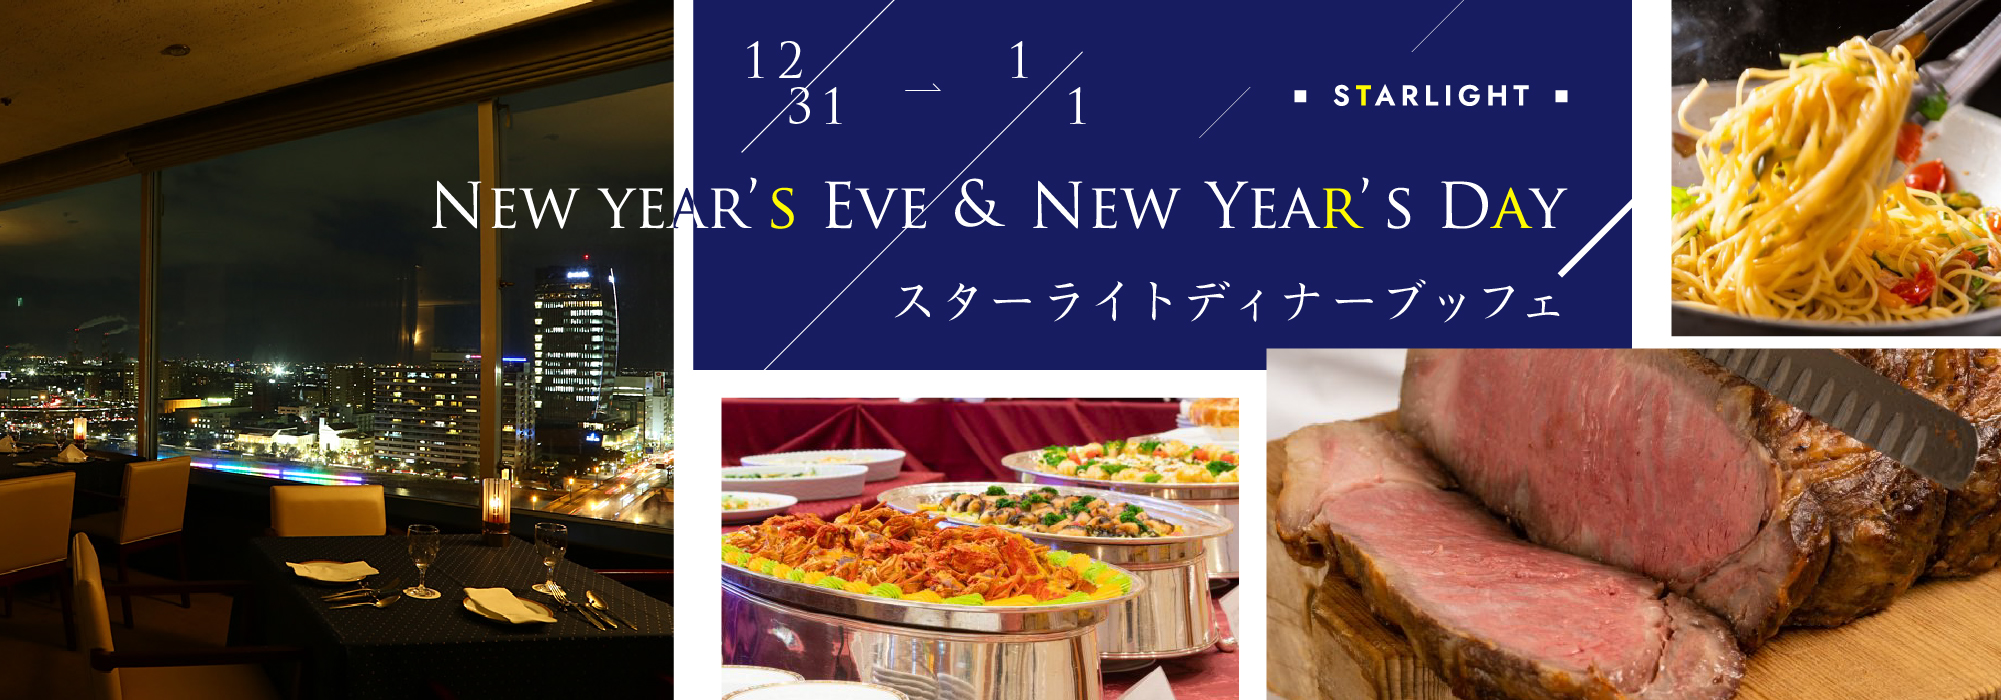 【12/31・1/1】New year’s Eve ＆ New Year’s Day スターライトディナーブッフェ